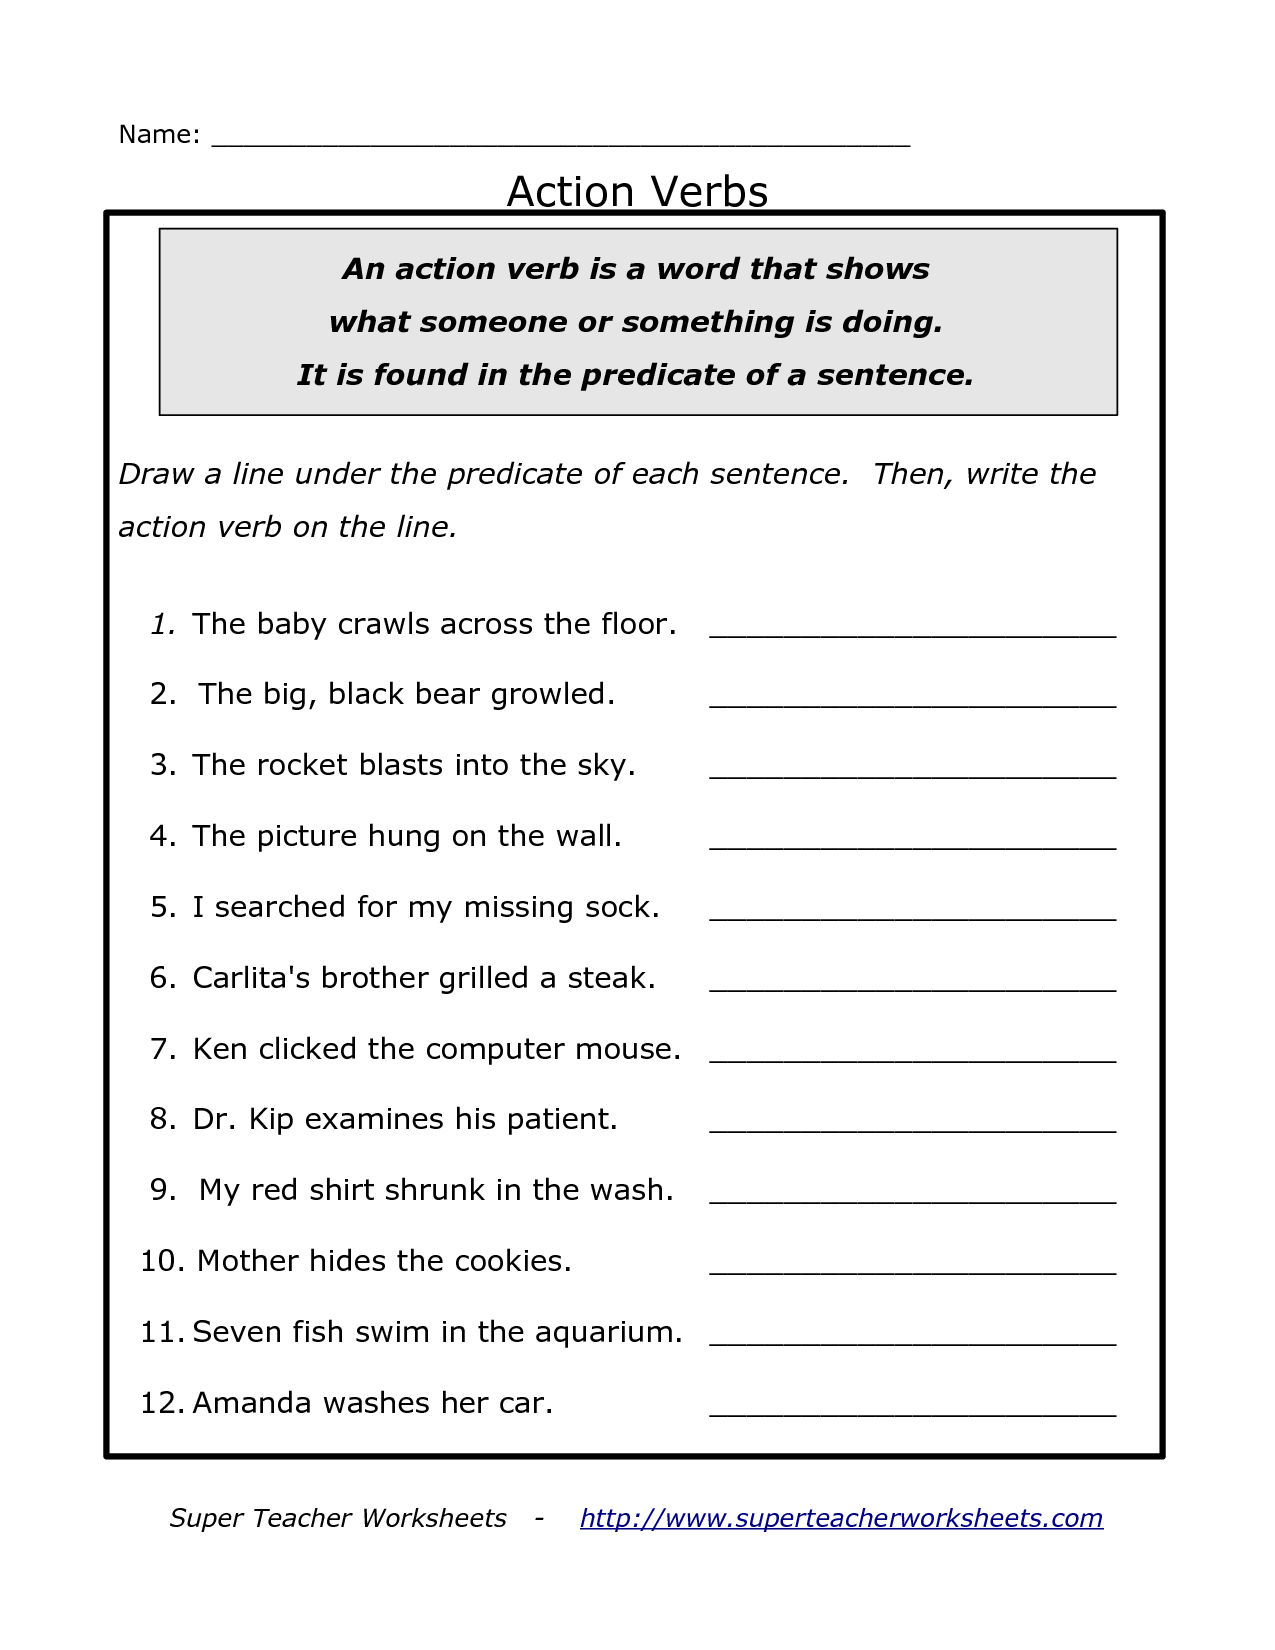 Mental And Visible Action Verbs Worksheet